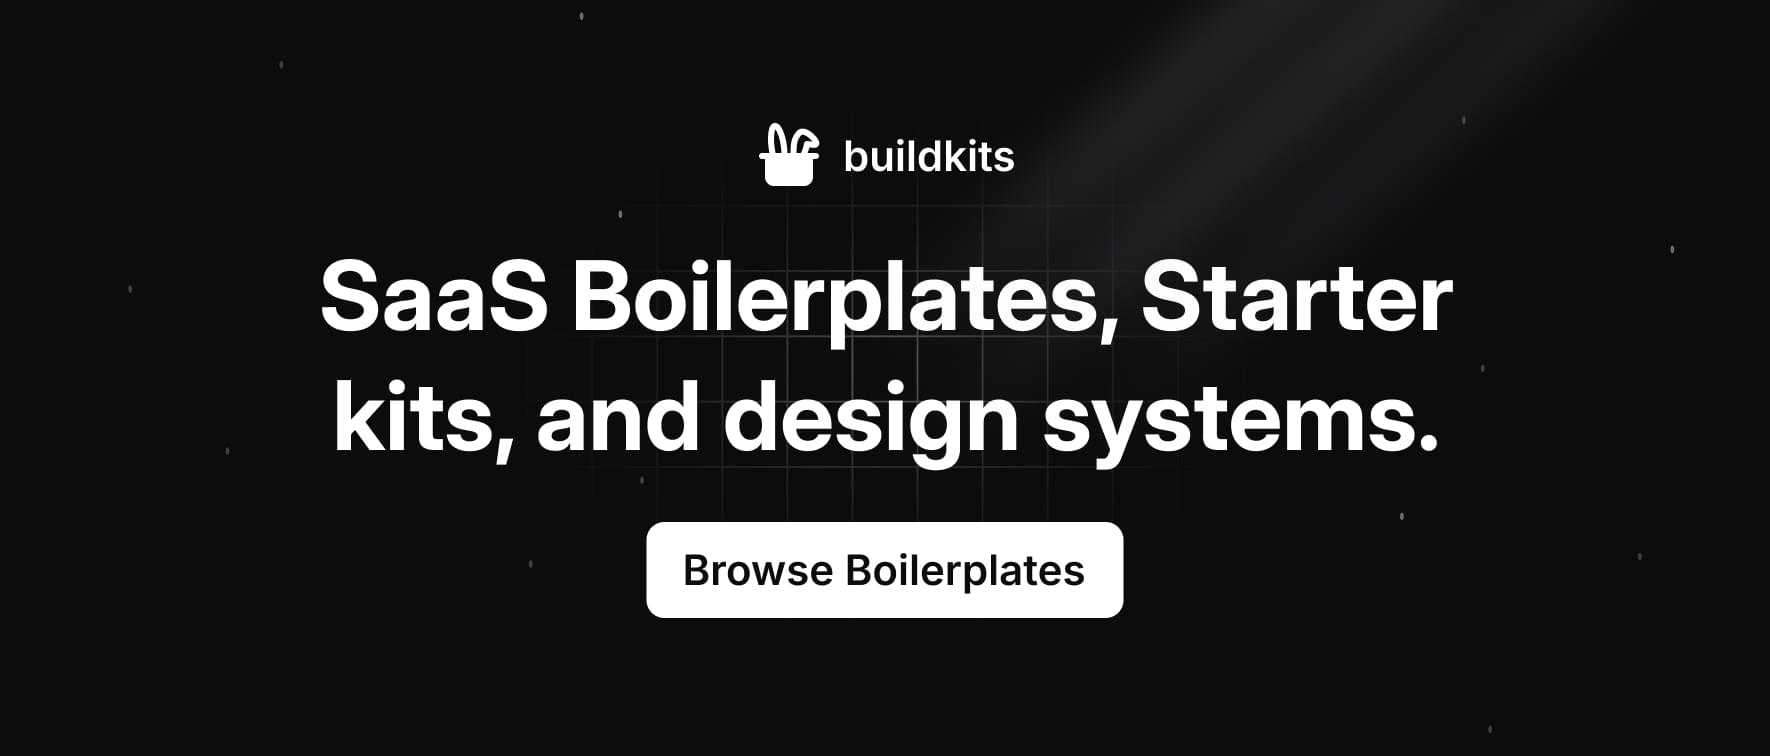 Buildkits logo